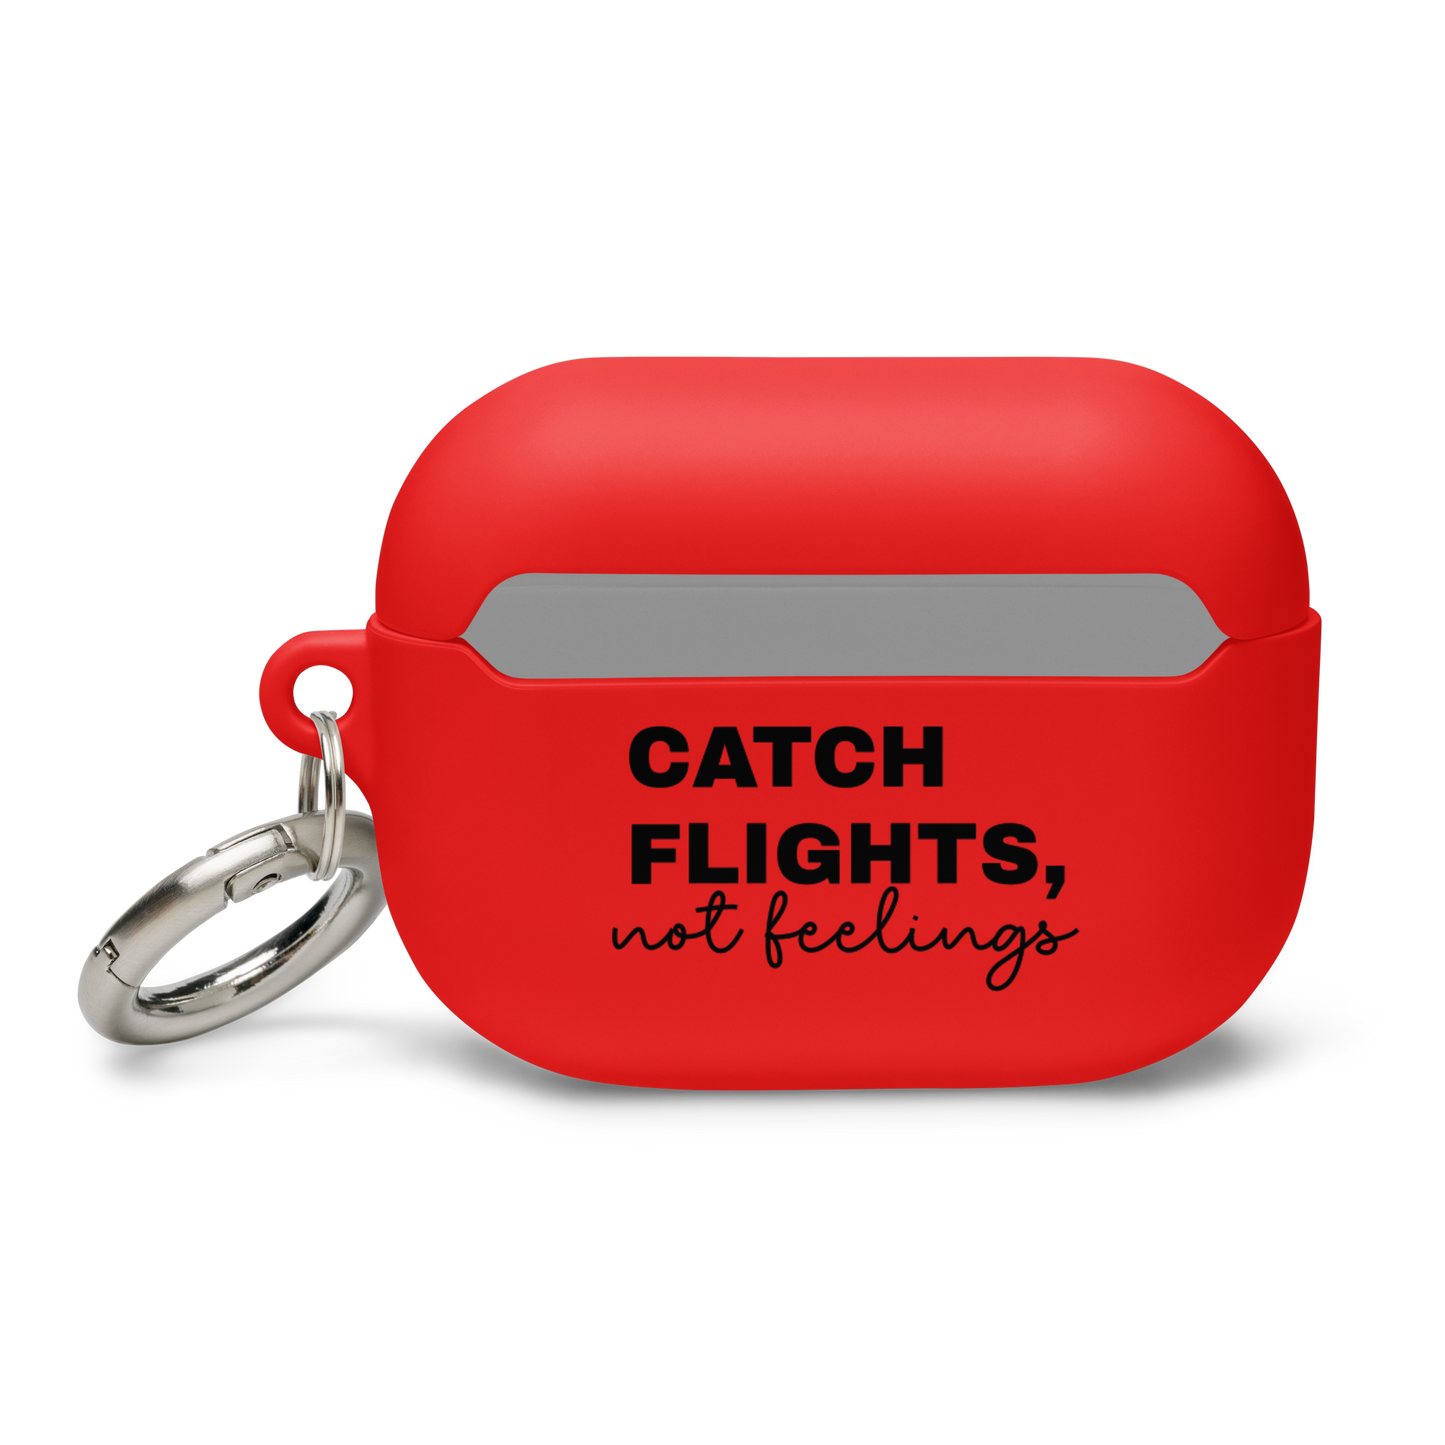 "Catch flights, not feelings" AirPods® Case